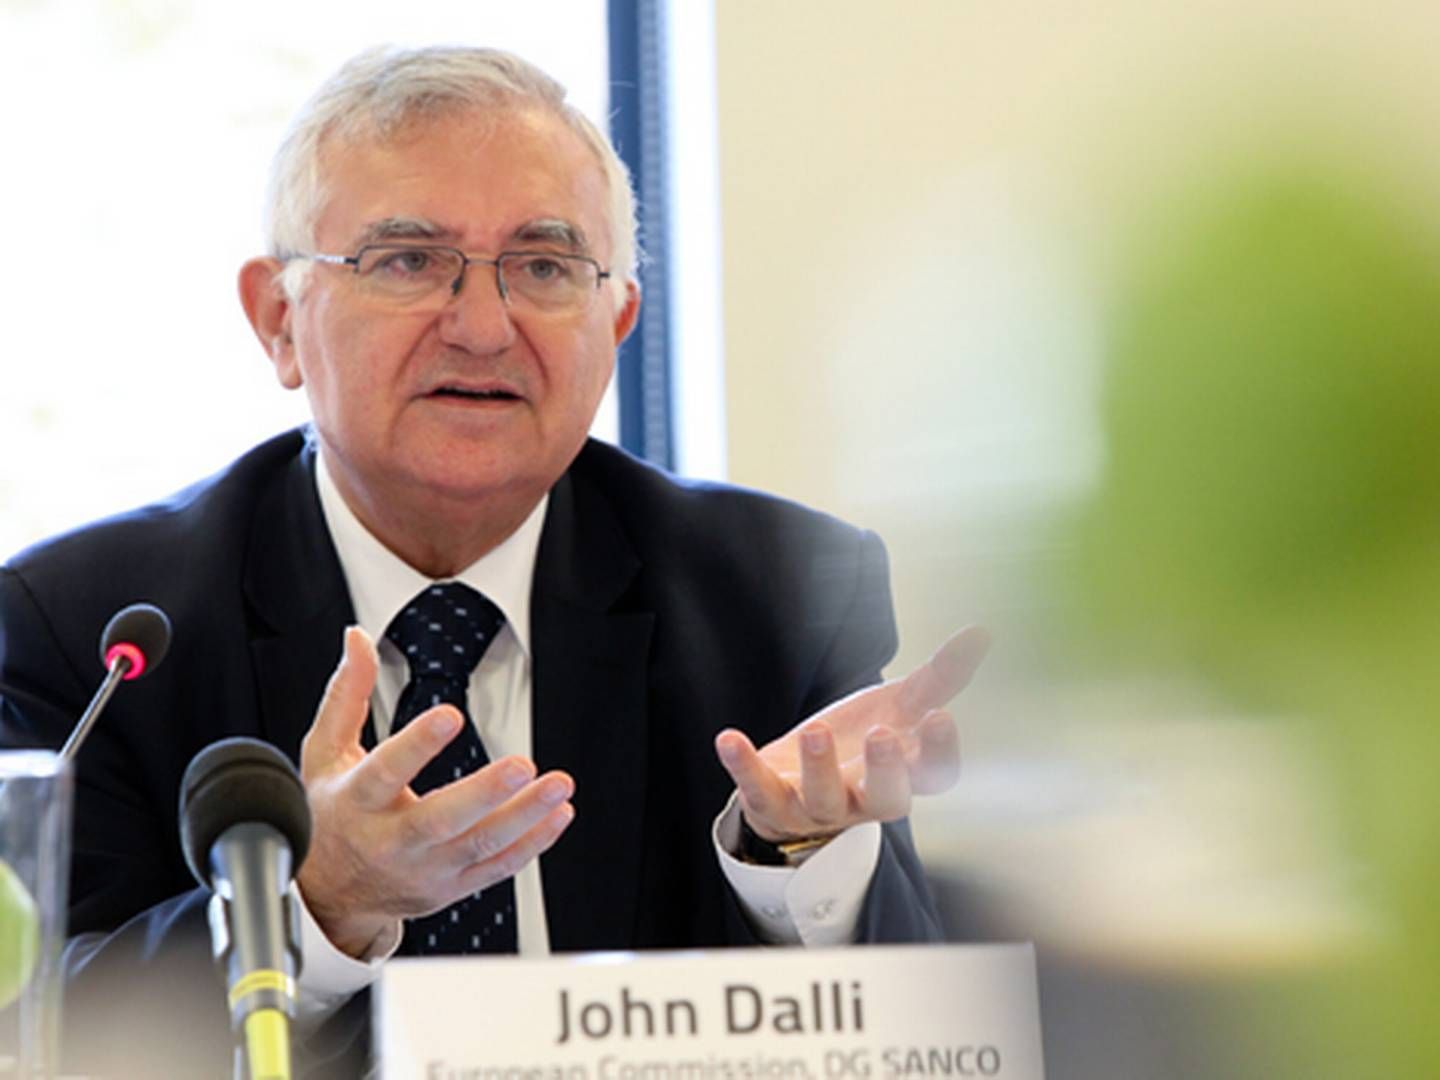 Foto: John Dalli, EU's sundhedkommissær - EU/PR